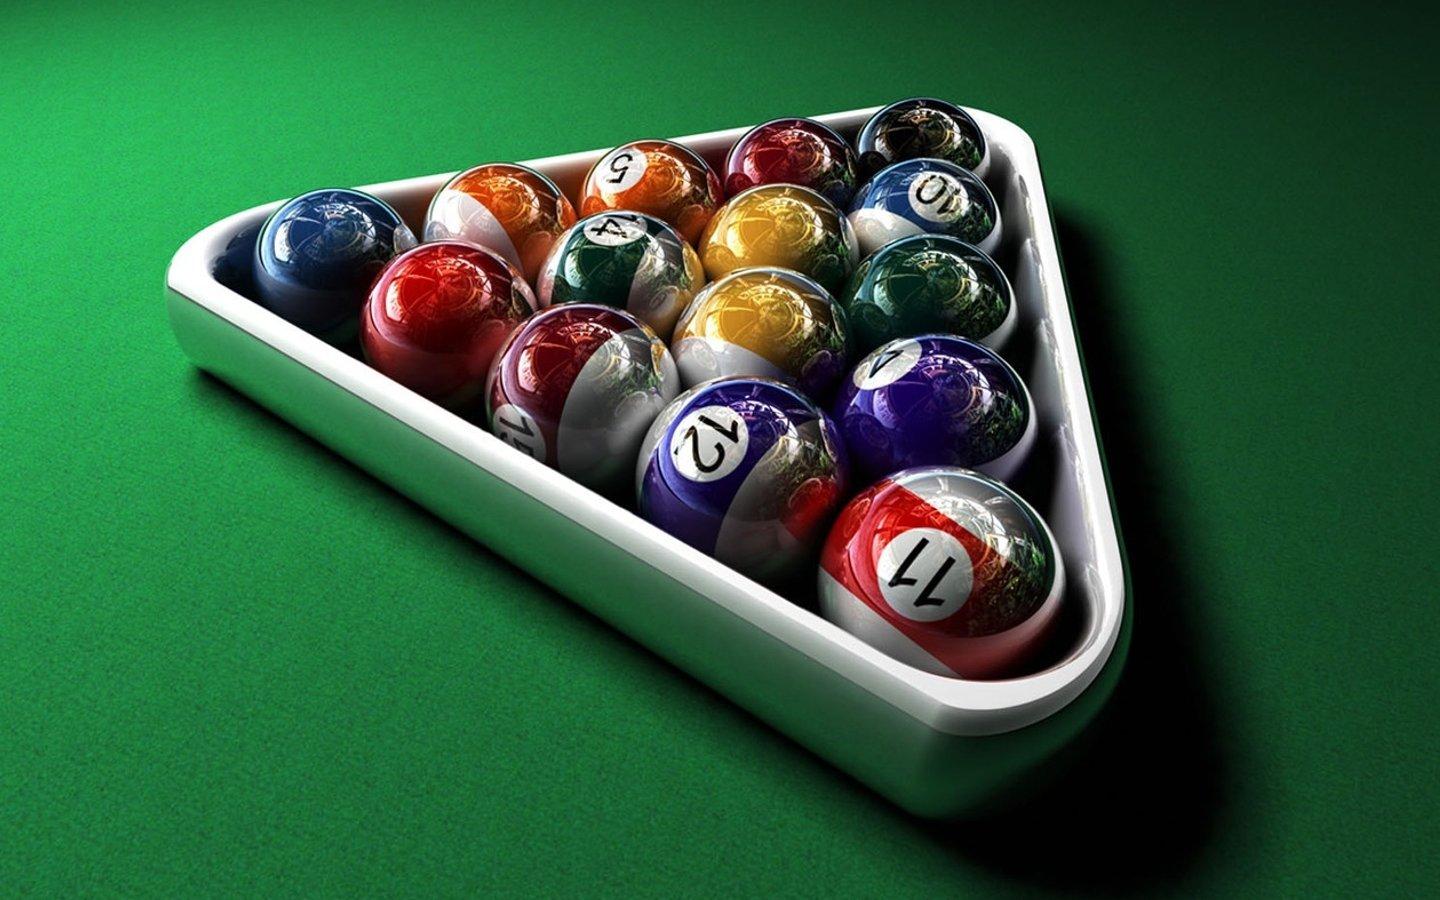 Pool Billiards wallpaper HD for desktop background